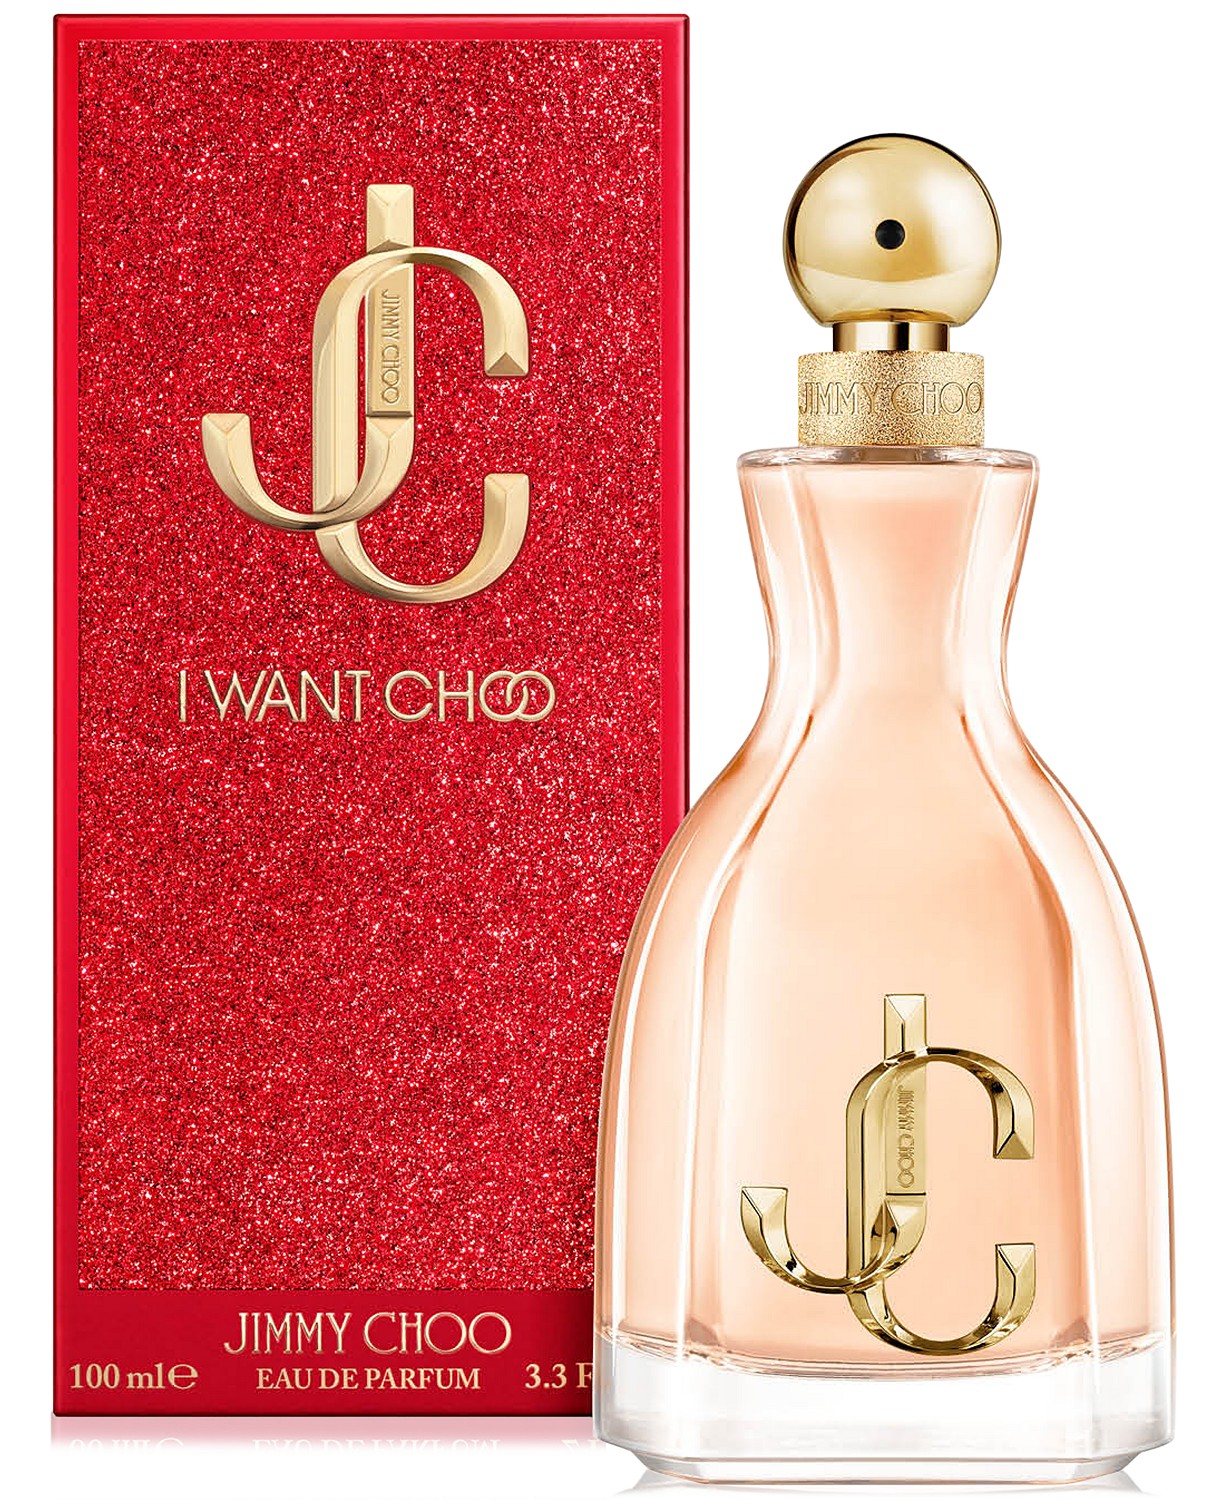 Jimmy Choo I Want Choo Eau de Parfum Spray